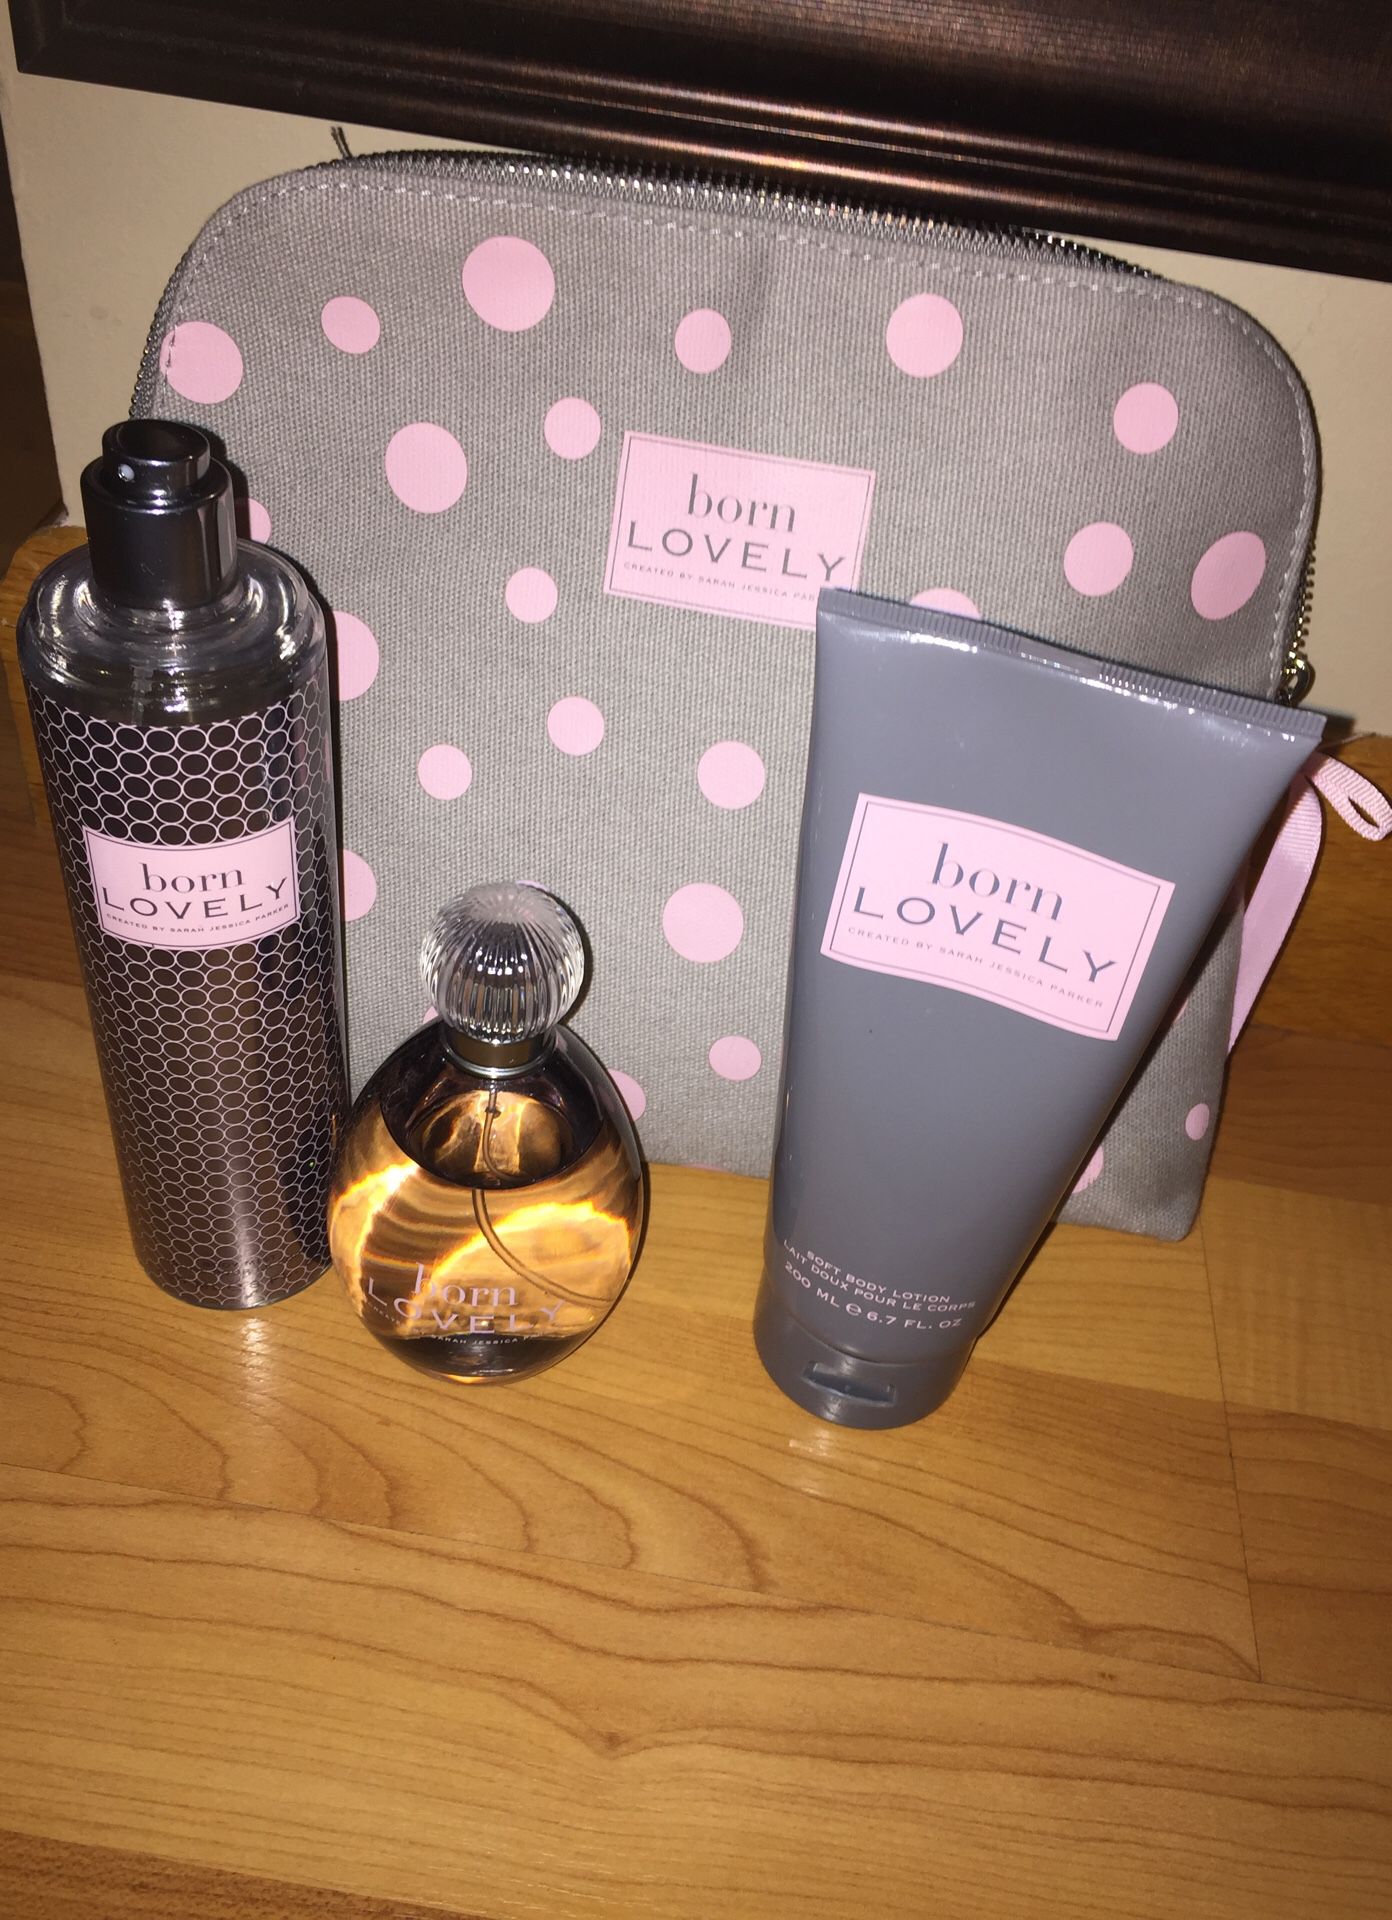 Born Lovely perfume set